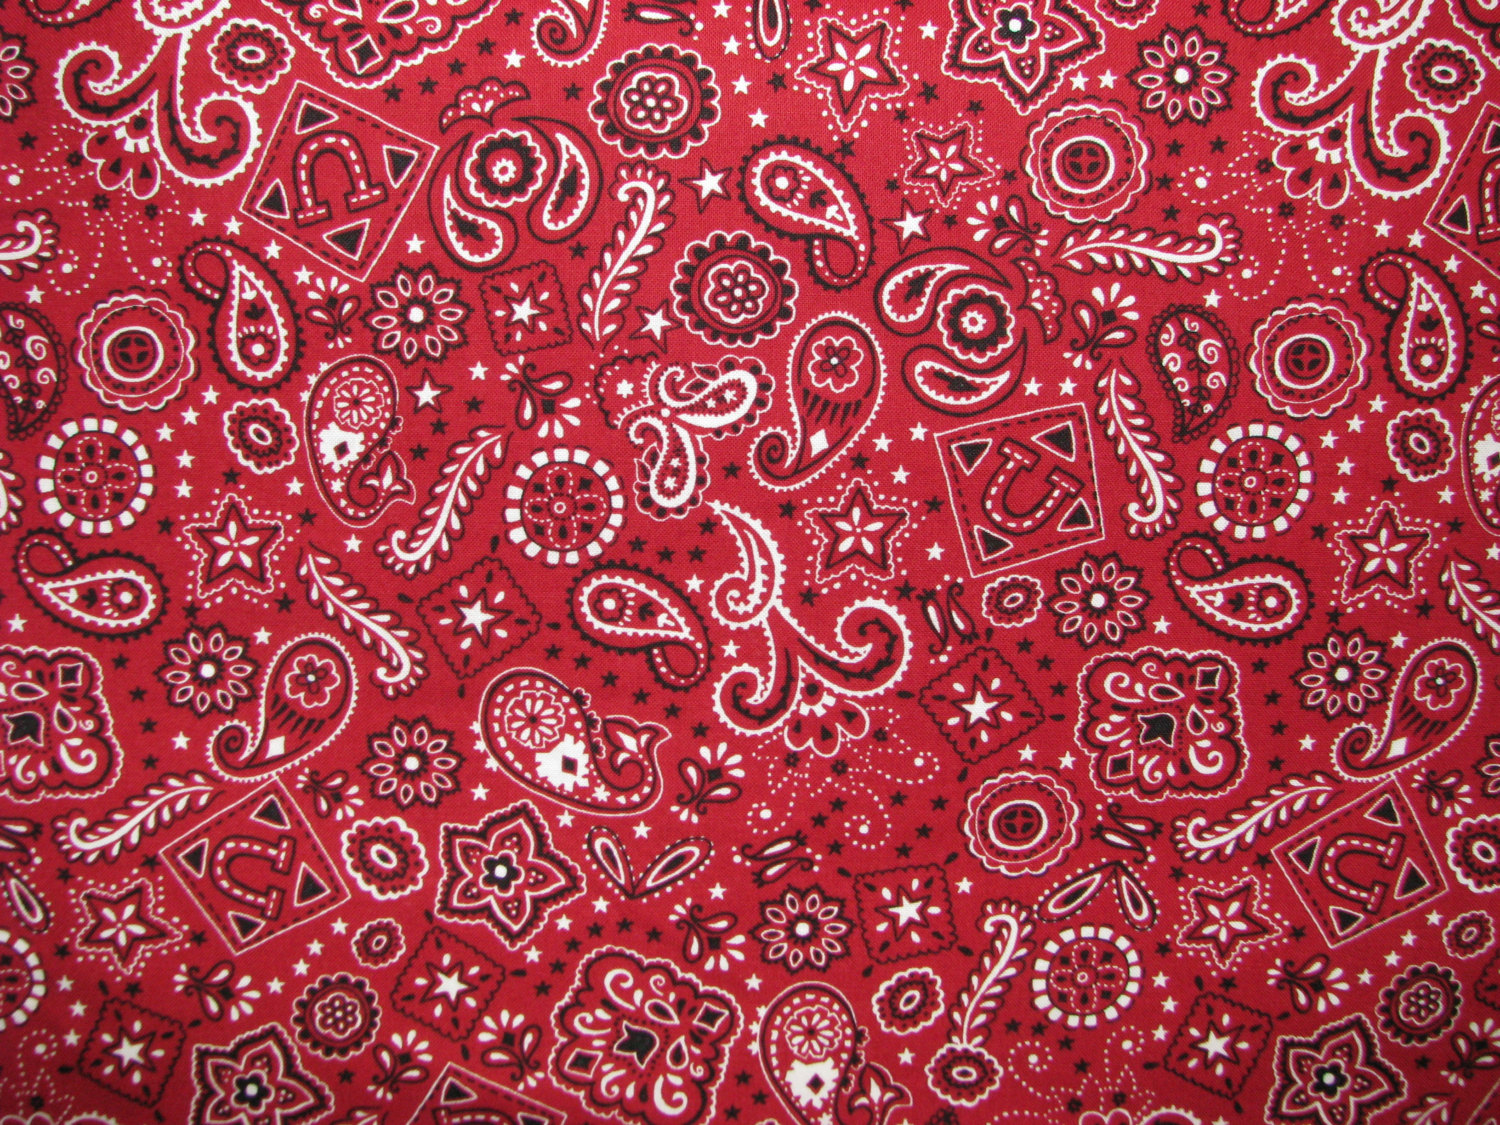 Giddy Up Cotton Fabric Red Black White Paisley Bandana Print